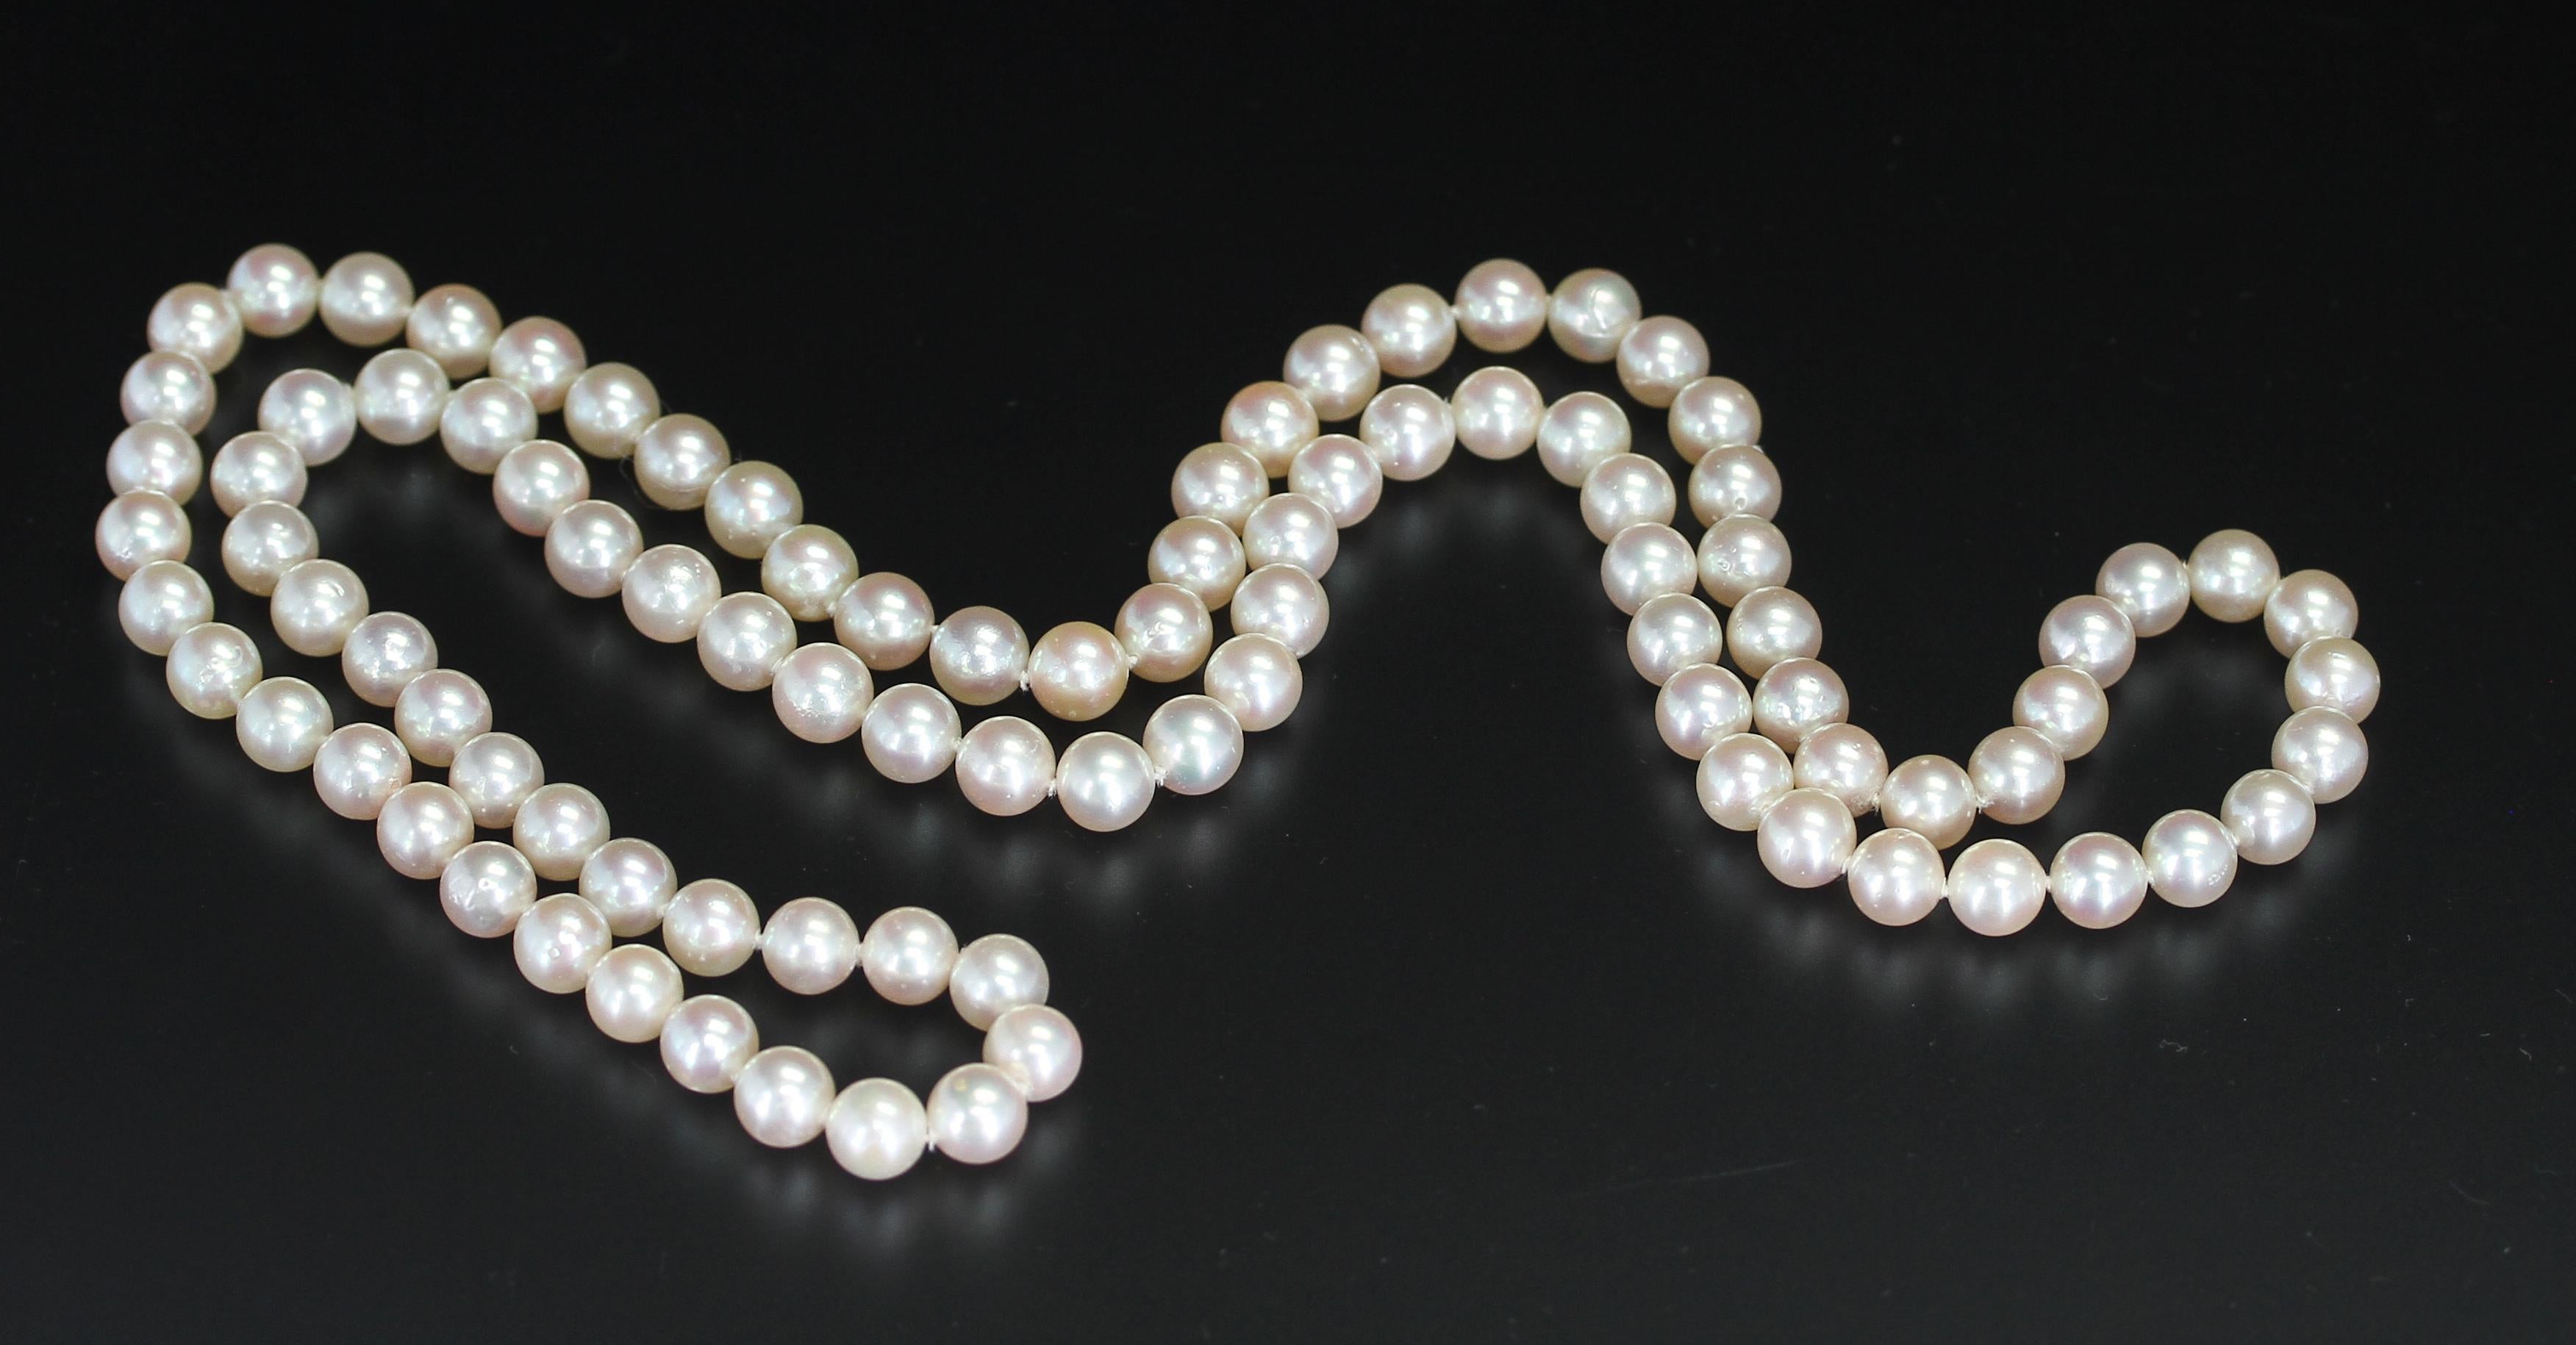 pearl necklace canada